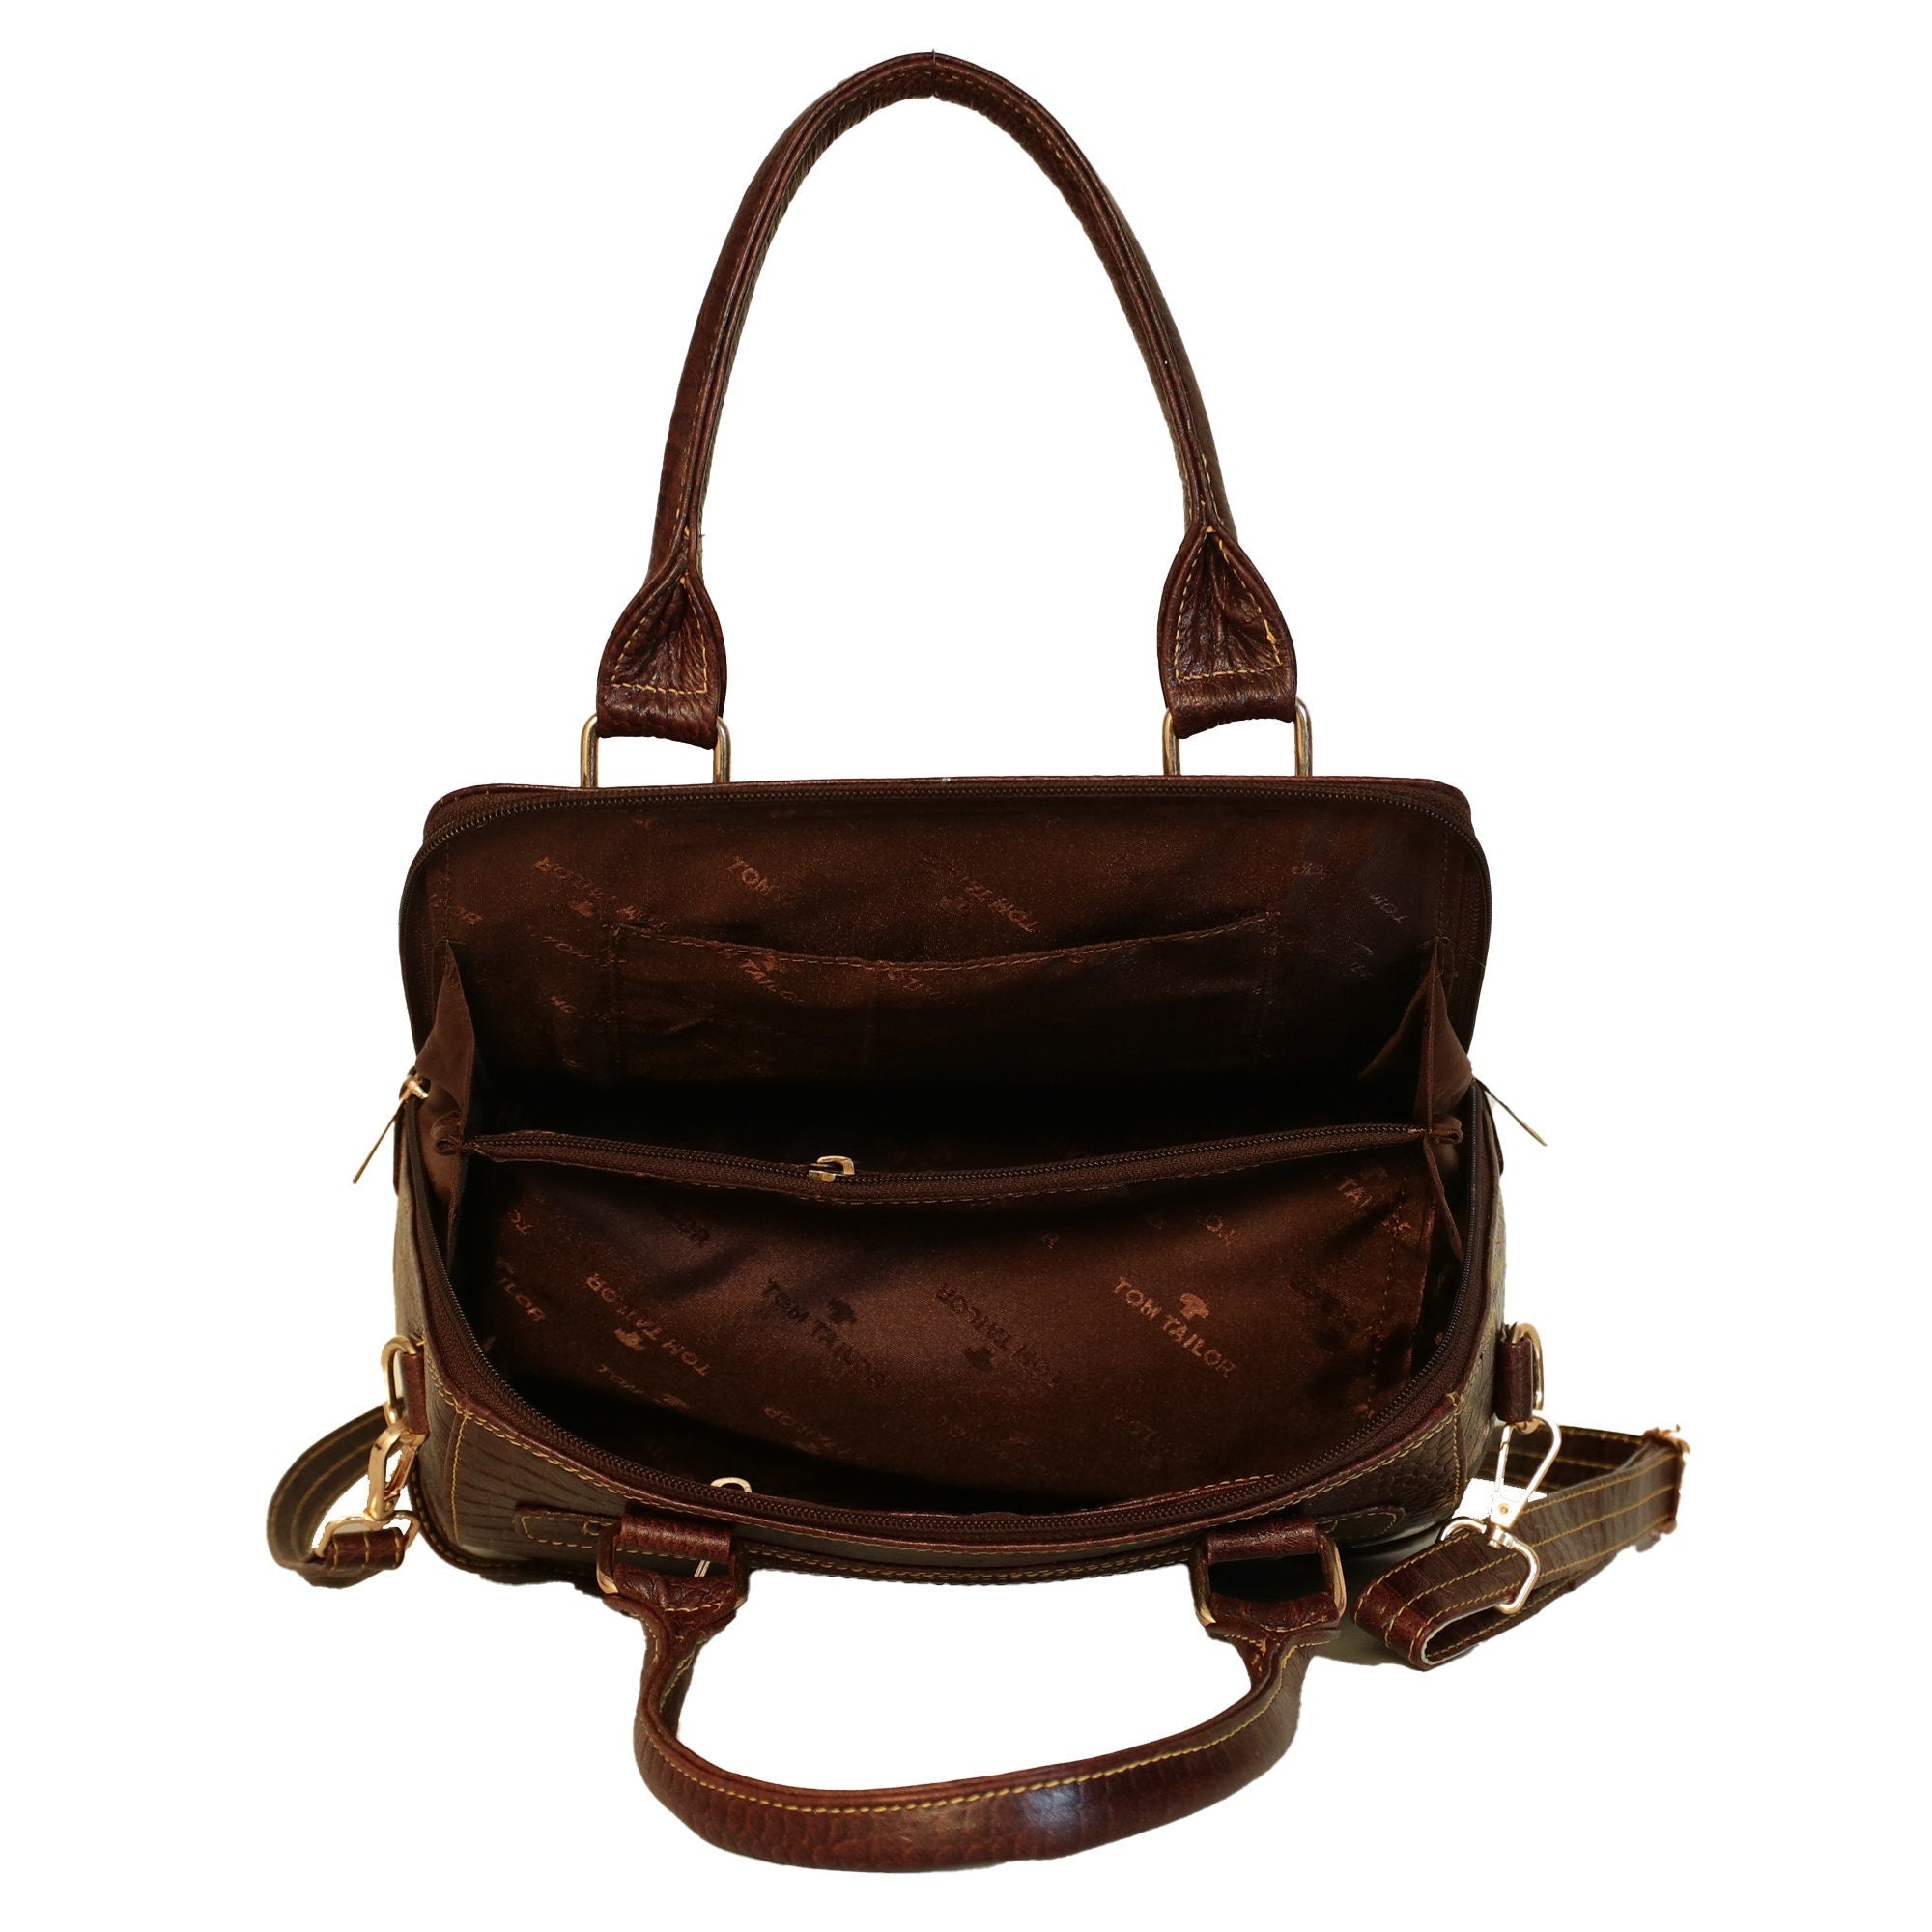 Diamond Stitched Ladies Handbag in Tan Genuine Leather